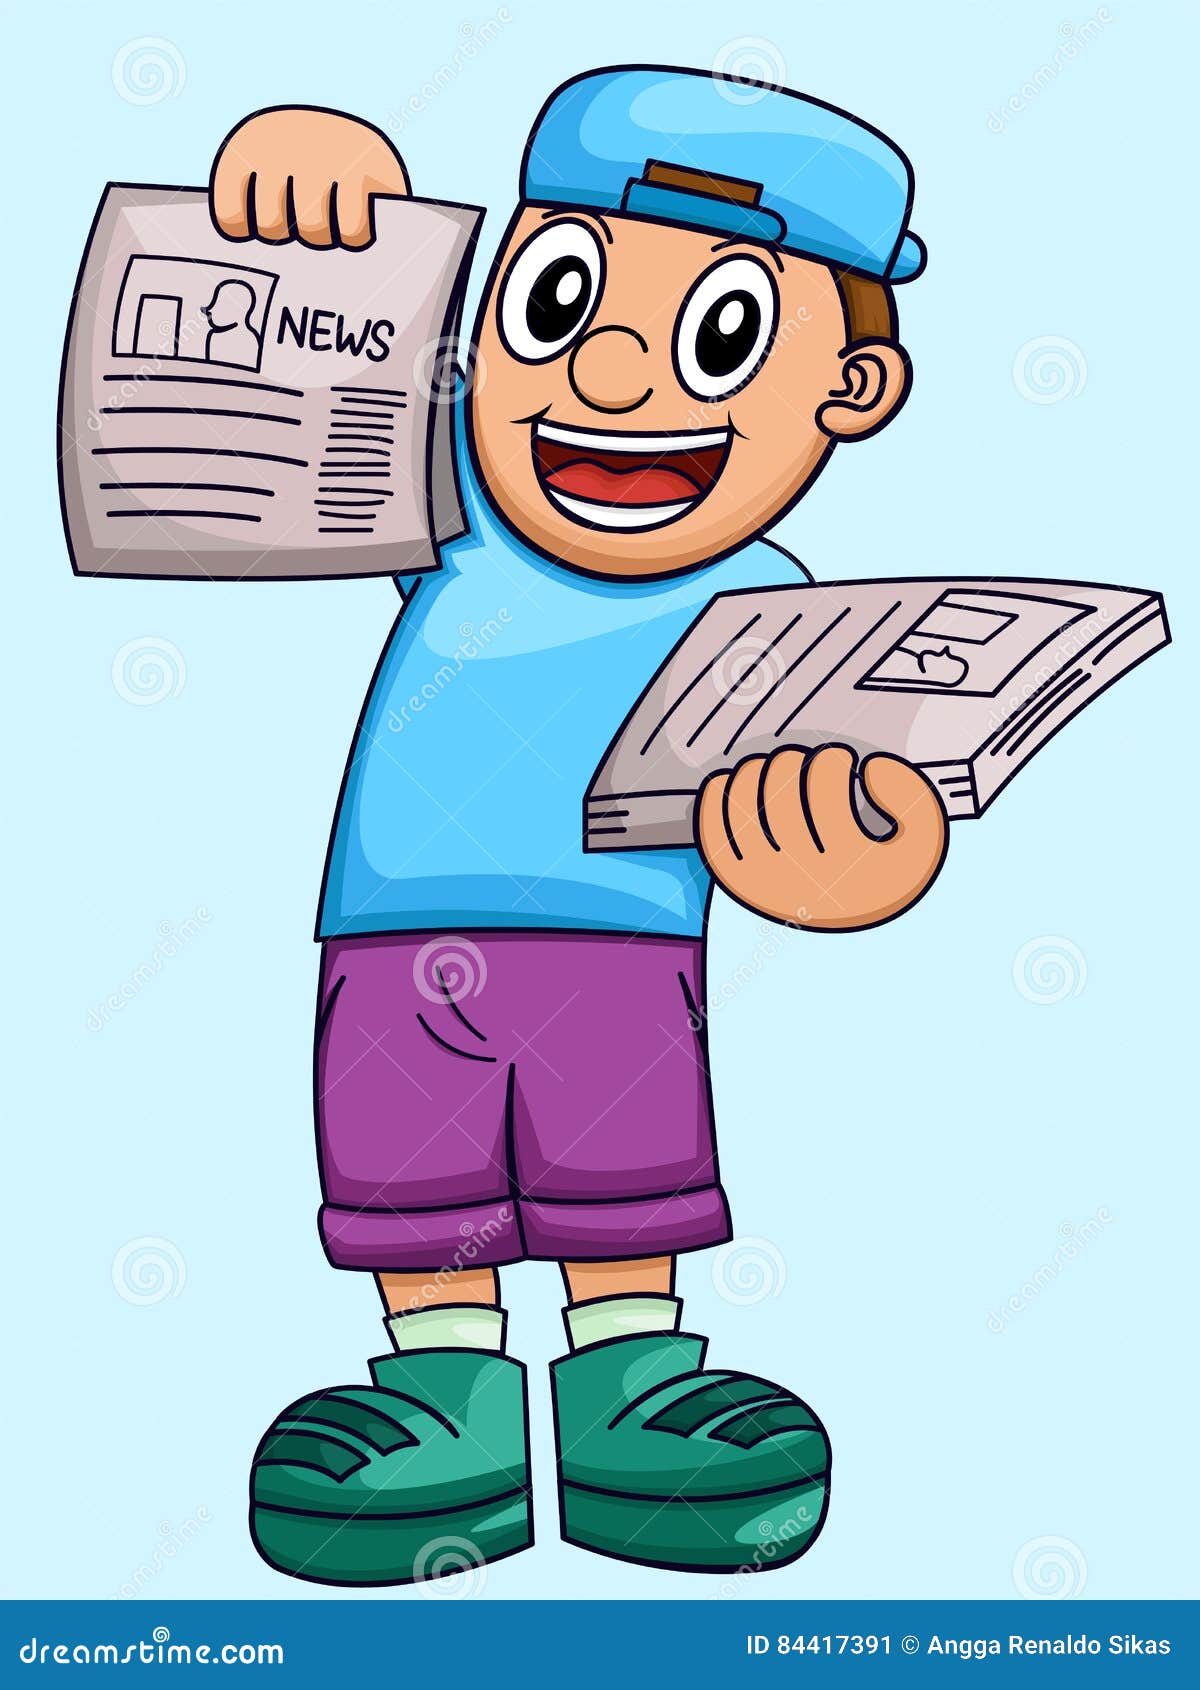 Cartoon Illustration of a Boy Selling Newspaper Stock Vector ...